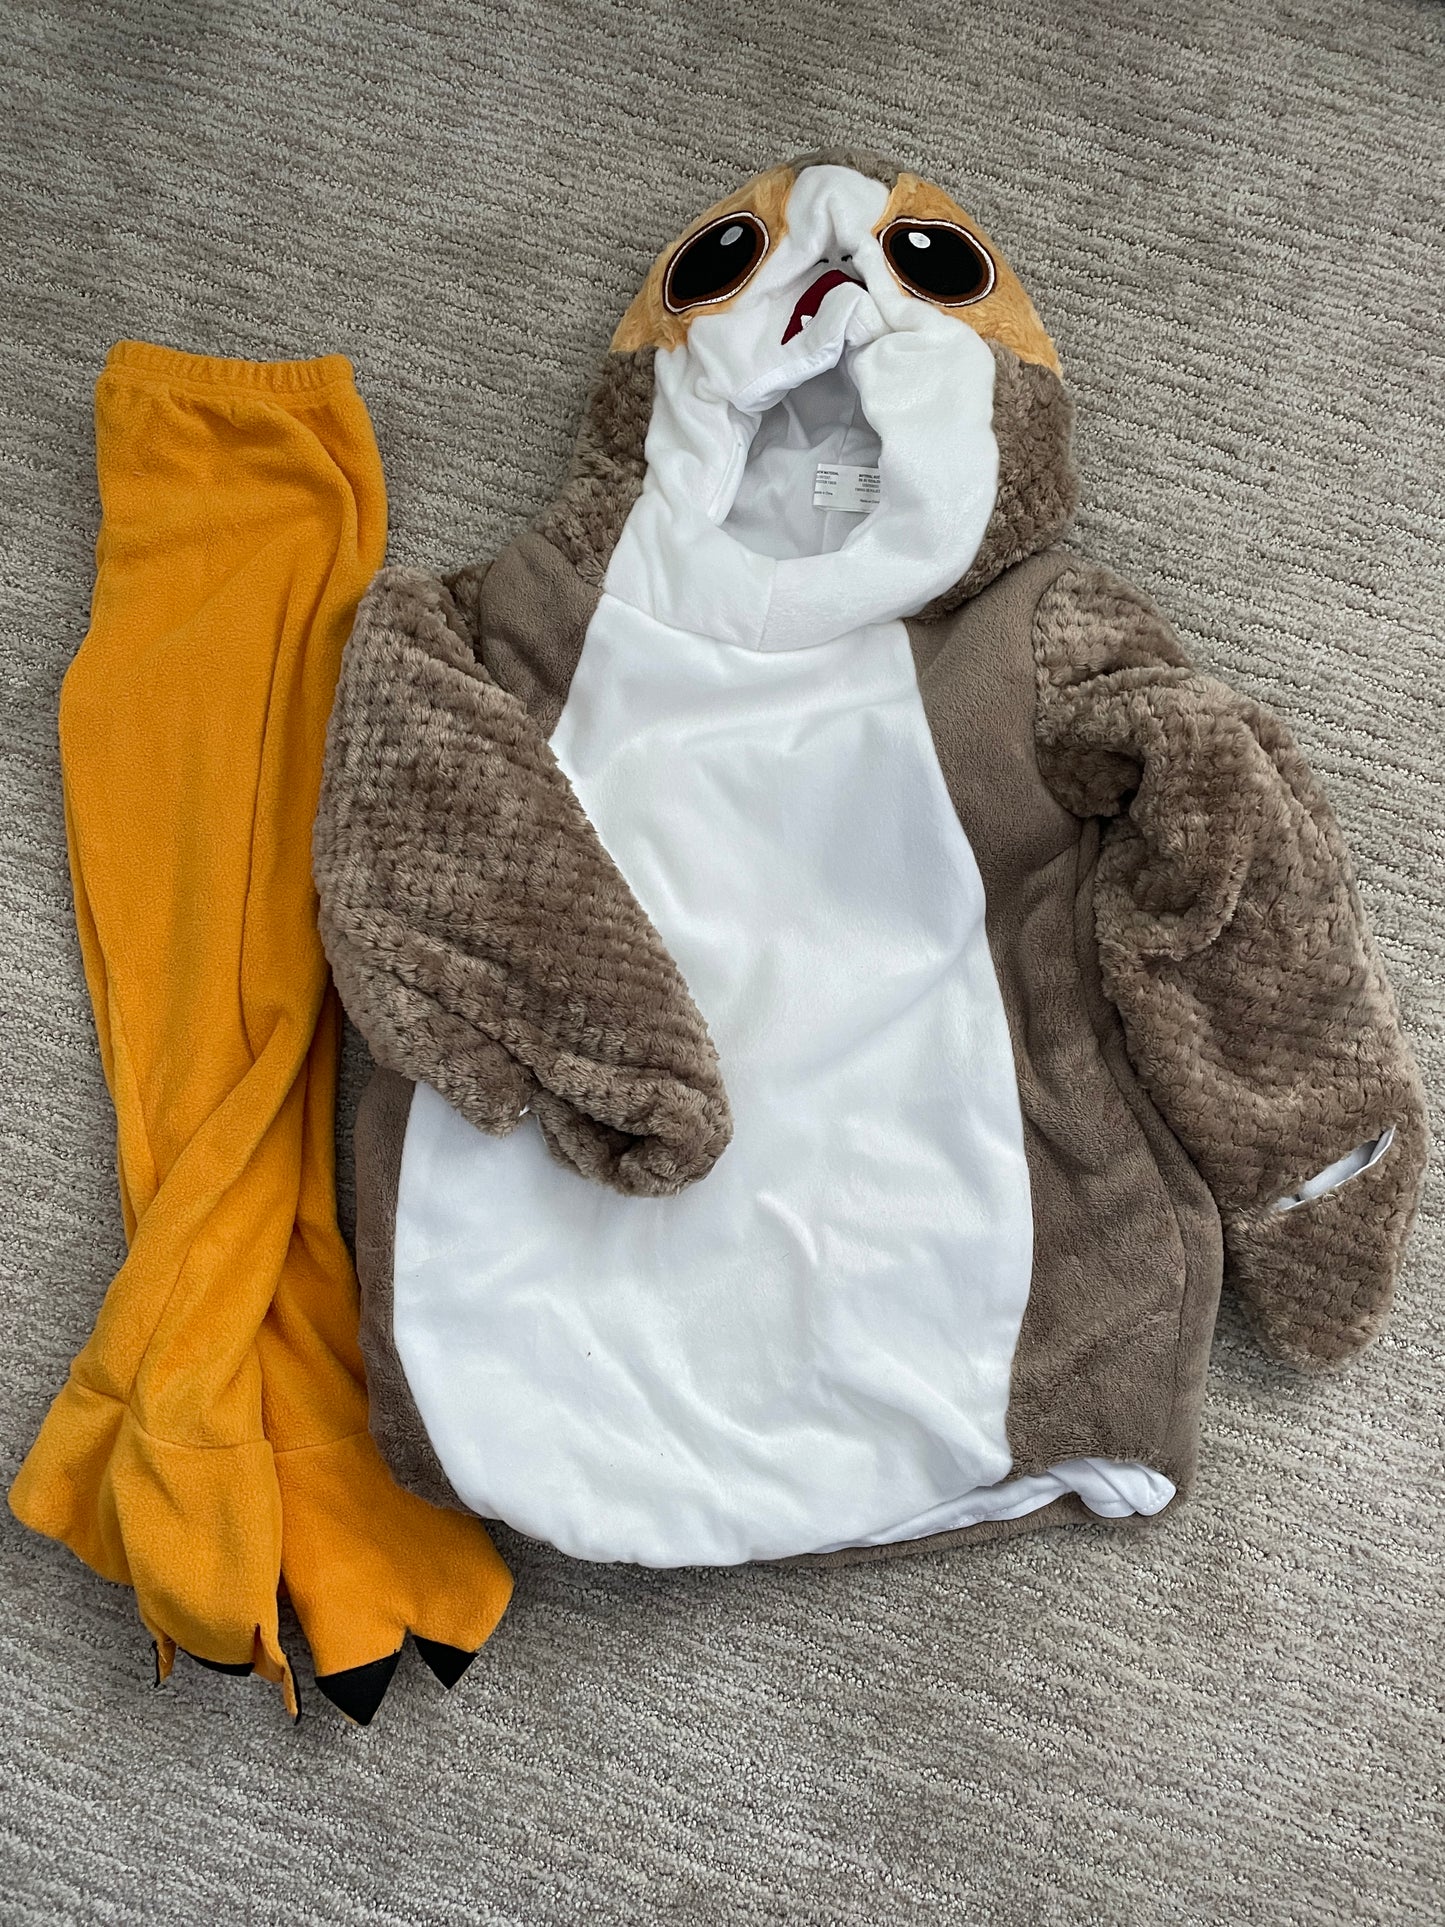 Star Wars Porg costume for kids